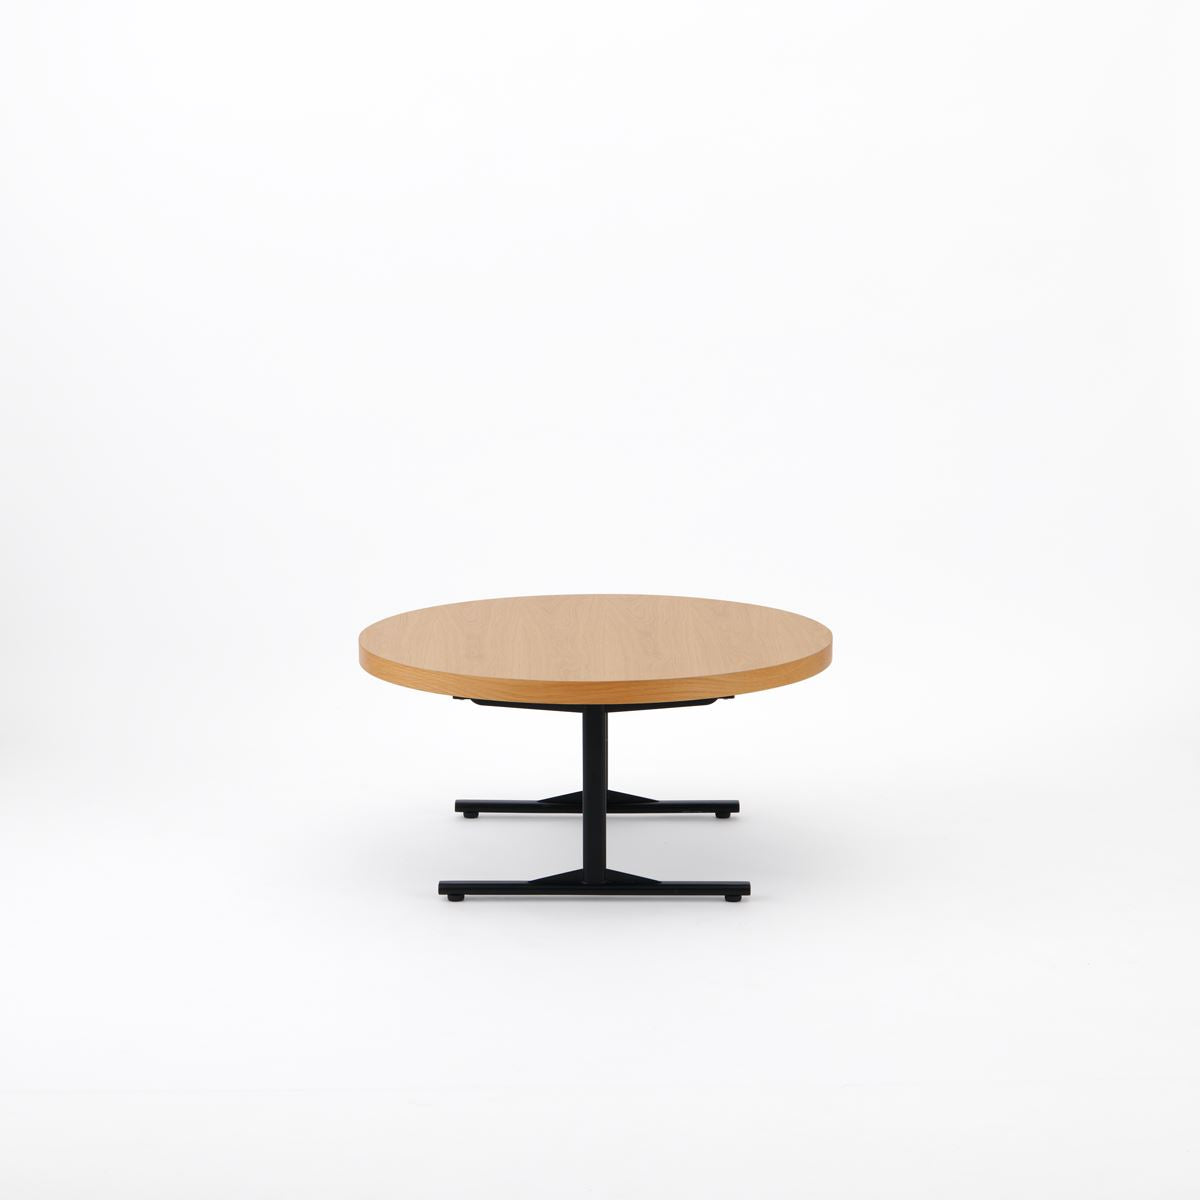 KUUM Living Table Φ850 - オーク突板ナチュラル / クーム  リビング テーブル